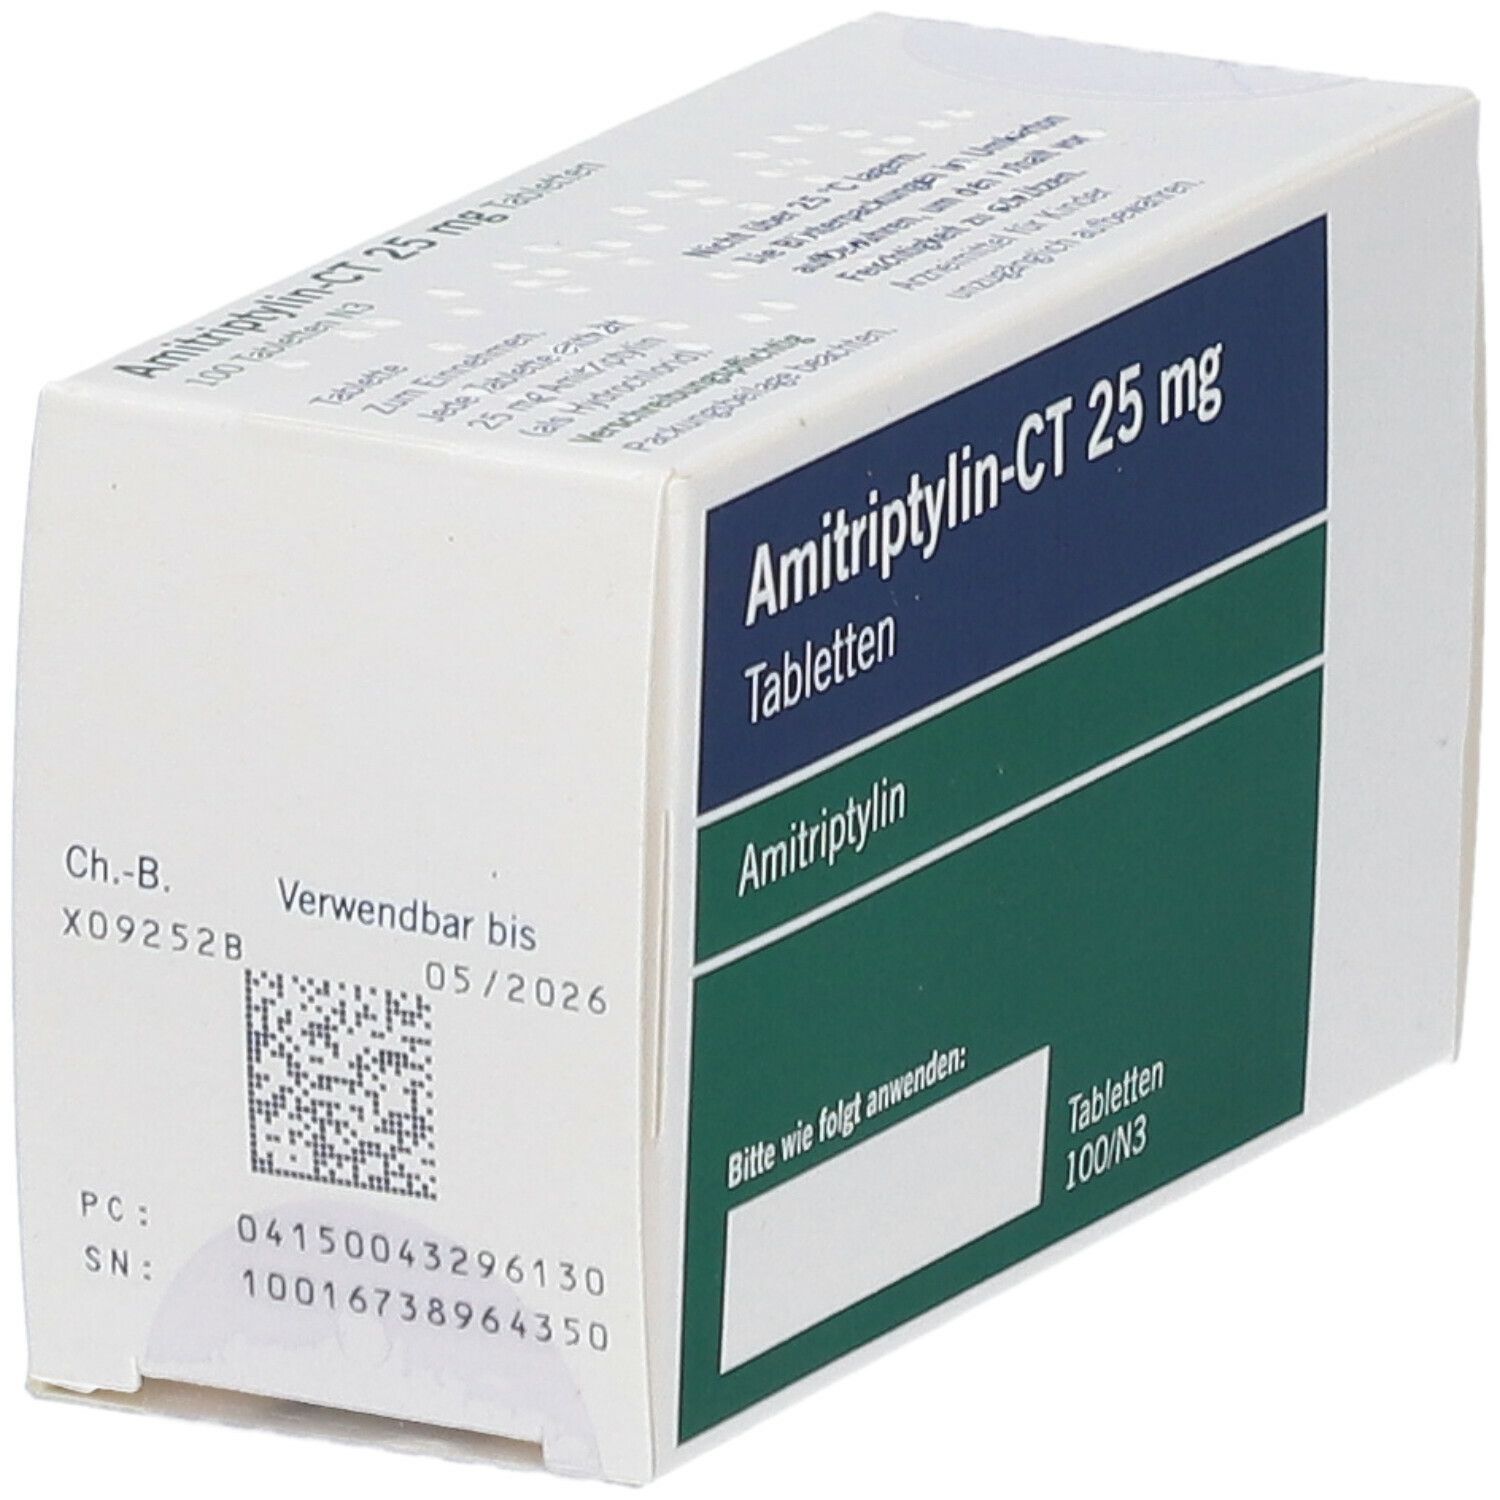 Amitriptylin - Ct 25Mgl